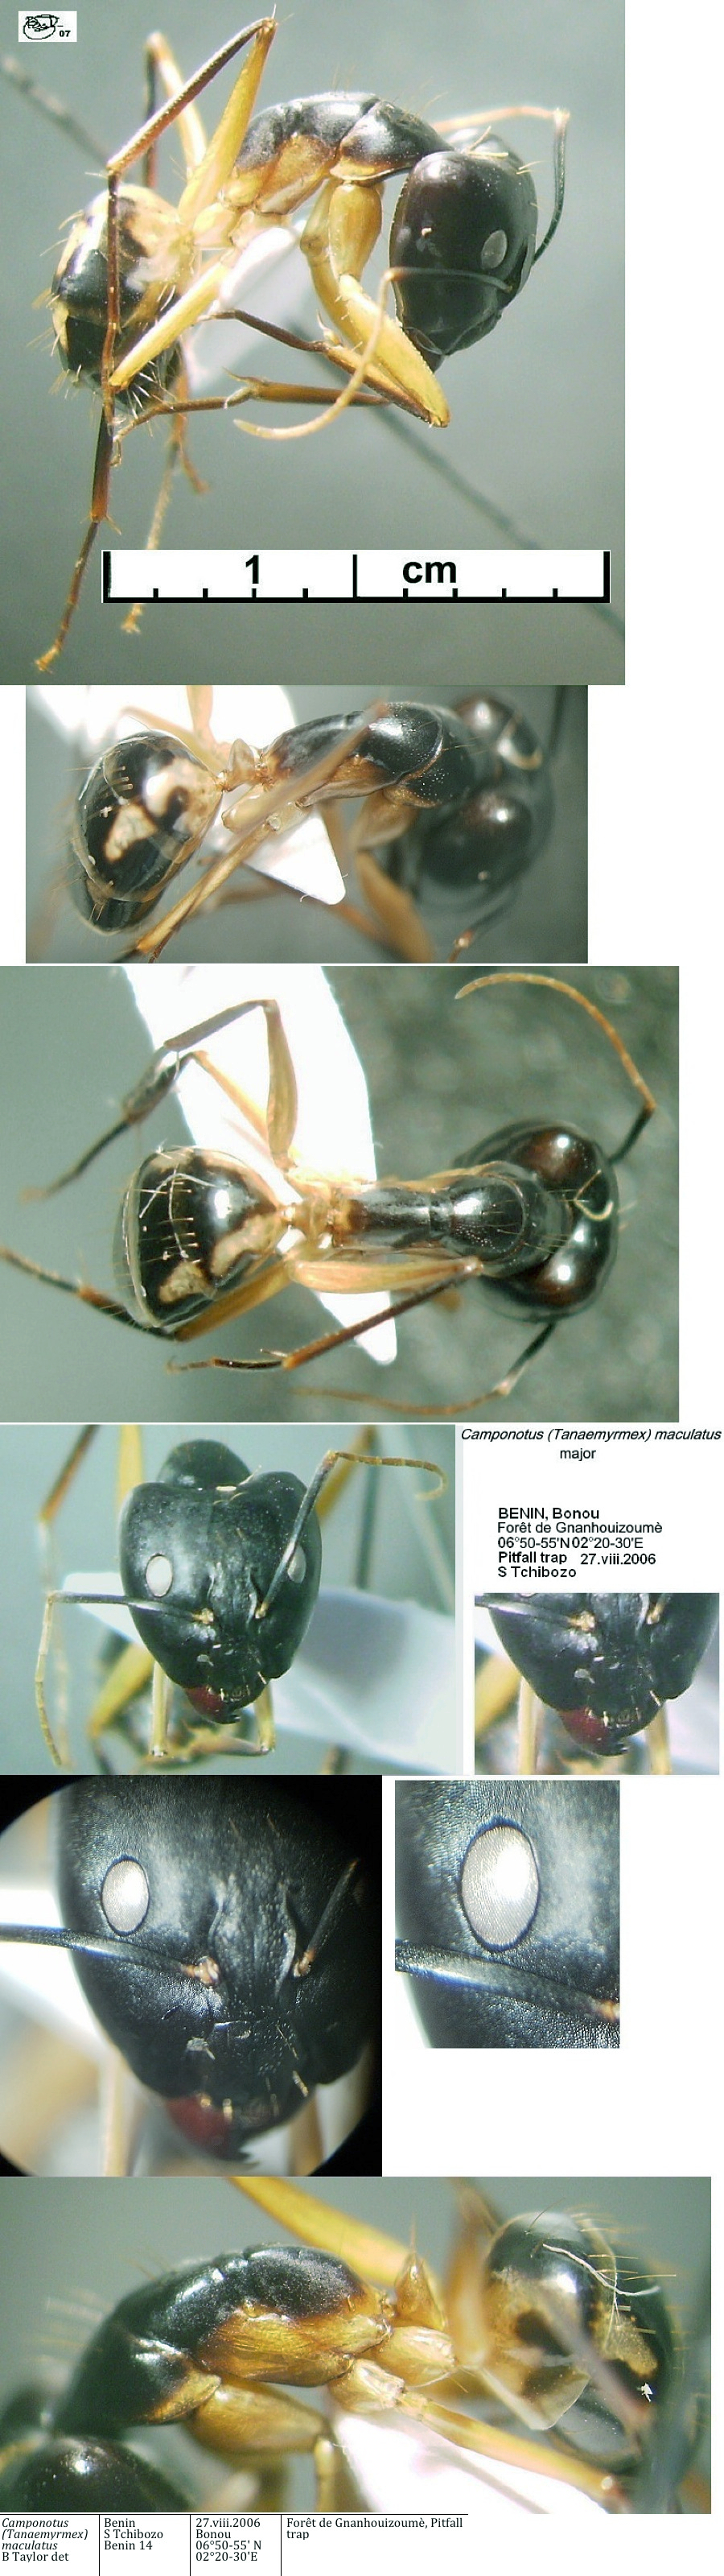 {Camponotus maculatus major Benin}